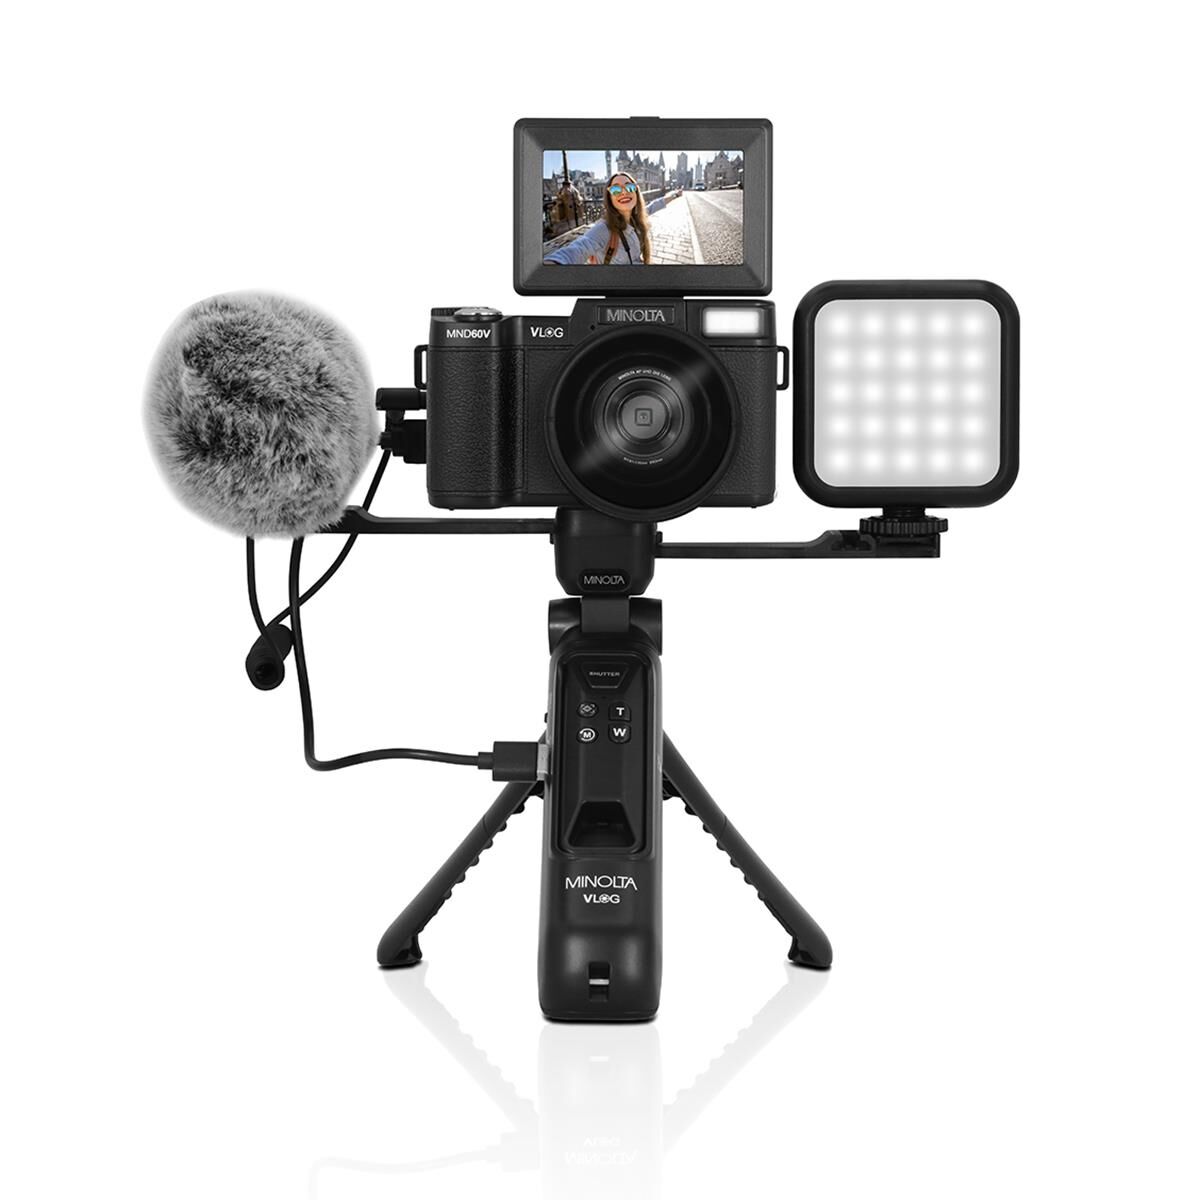 Konica Minolta MND60V 64MP 4K UHD Auto Focus Vlogging and Content Creator's Camera Kit